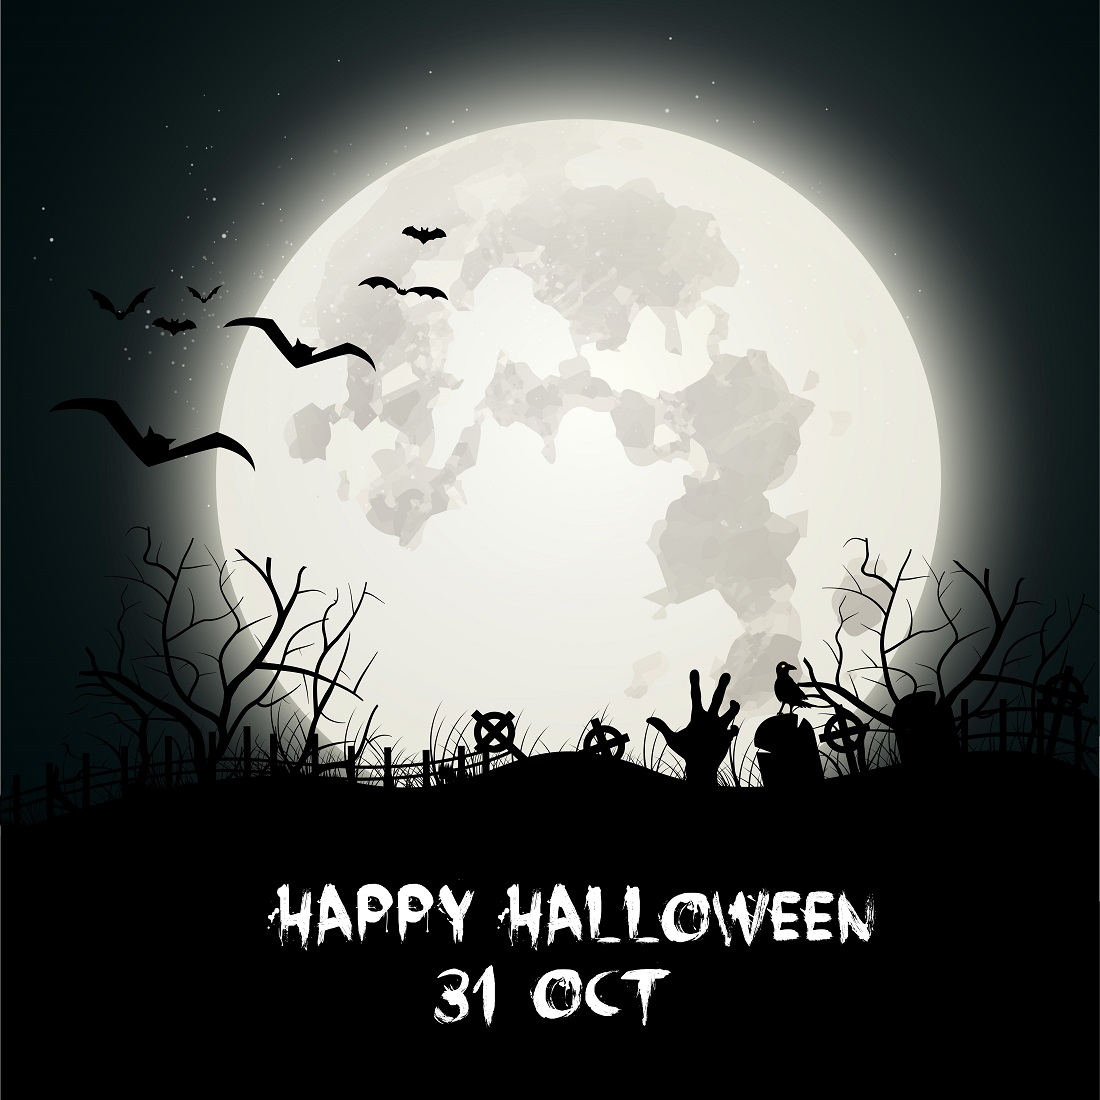 Dark Halloween background preview image.